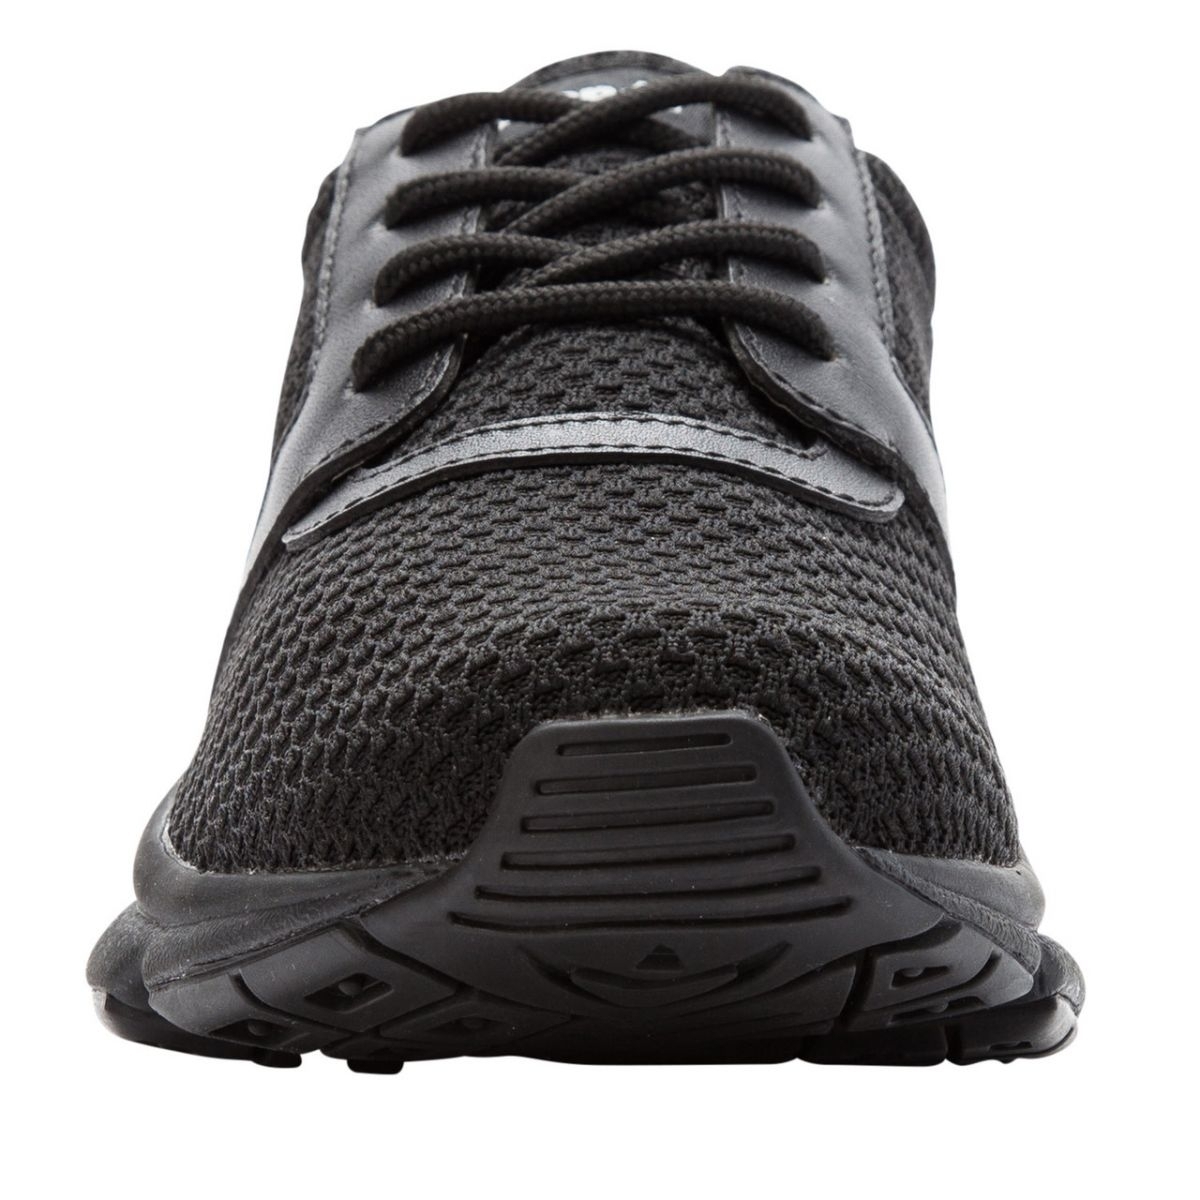 Propet Women's Stability X Walking Shoe Black - WAA032MBLK BLACK - BLACK, 7.5 Narrow